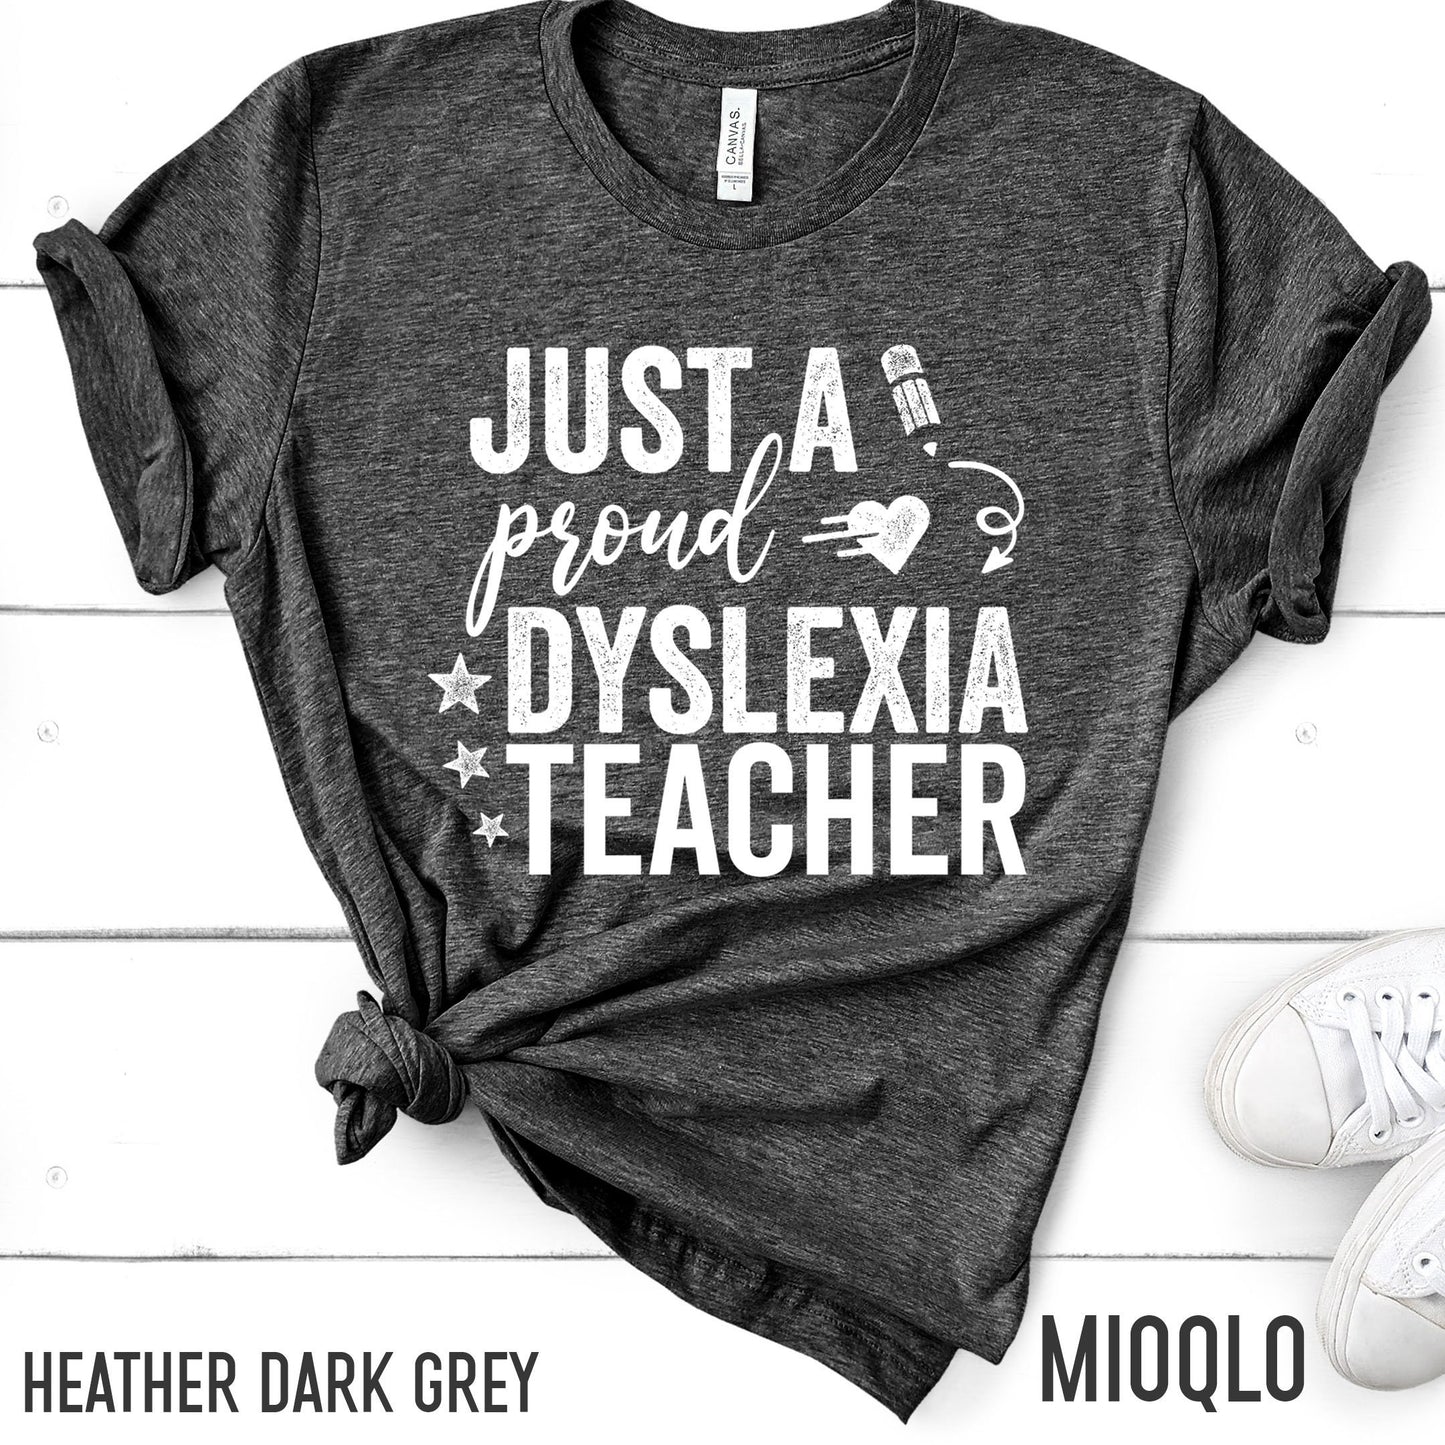 Just A Proud Dyslexia Teacher Shirt, Dyslexia Therapist Reading Teacher T-Shirt, Dyslexia Awareness Dyslexia Squad Tee Team Gift